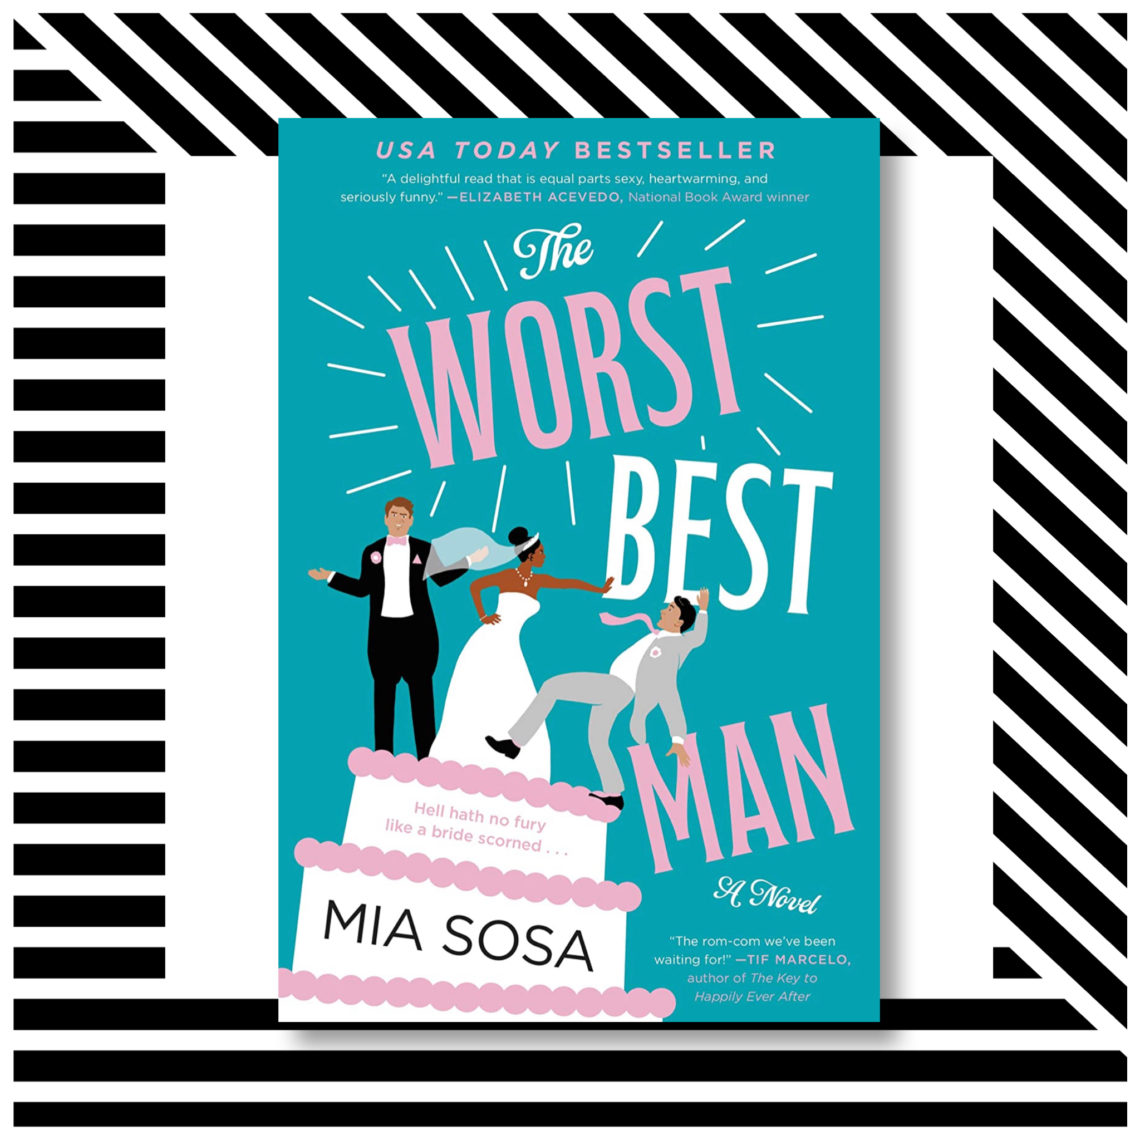 The Worst Best Man by Mia Sosa